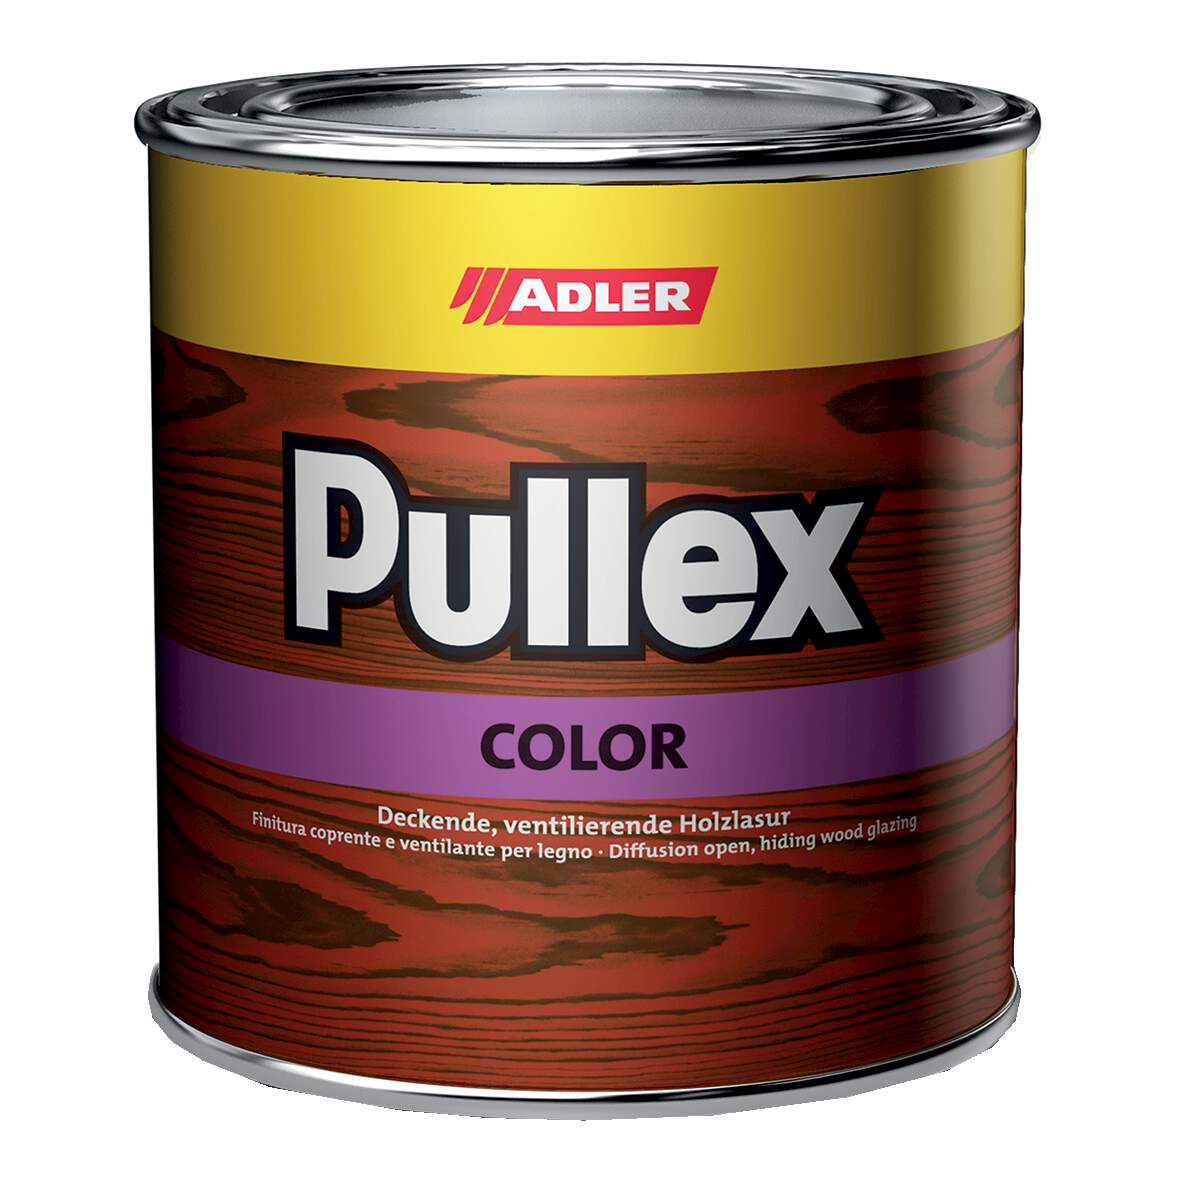 1132267 - Pullex color, Abtönung